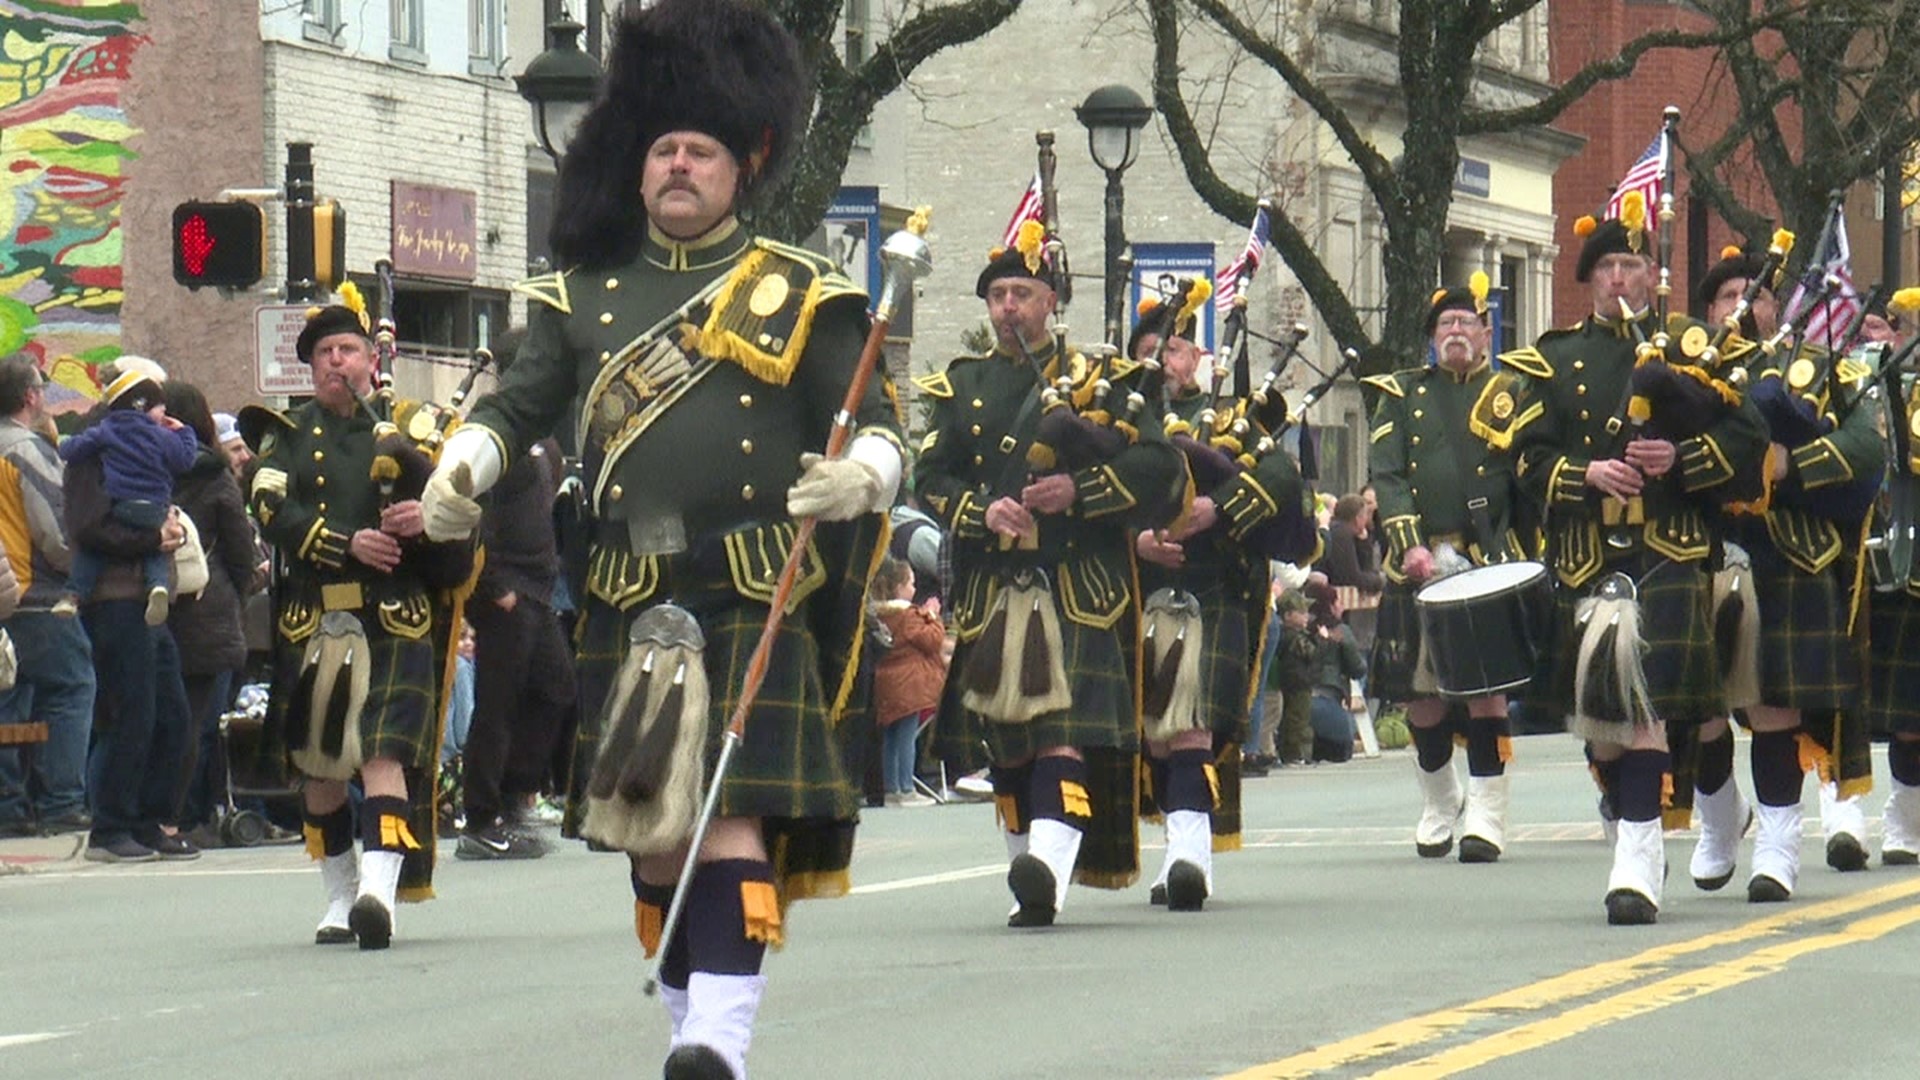 Stroudsburg's St. Patrick's Day parade returns